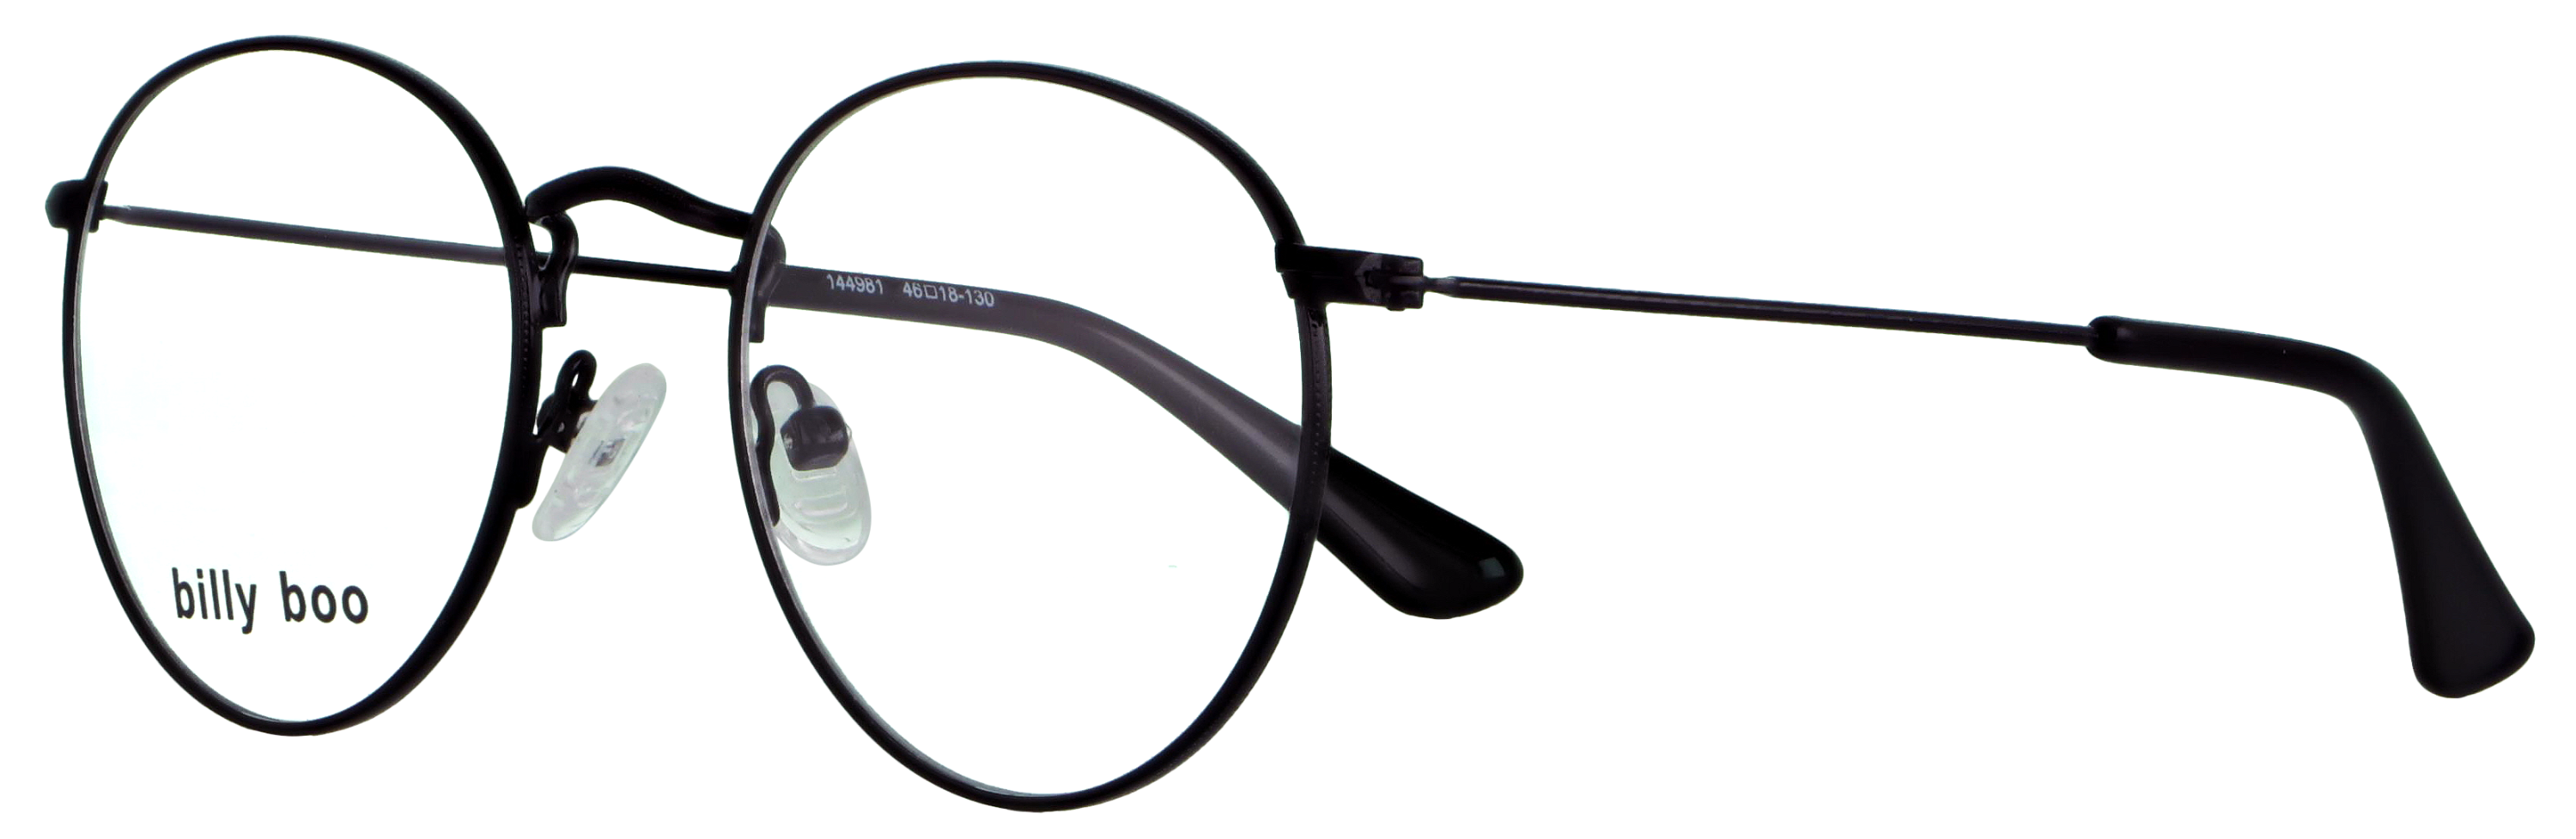 abele optik Kinderbrille 144981